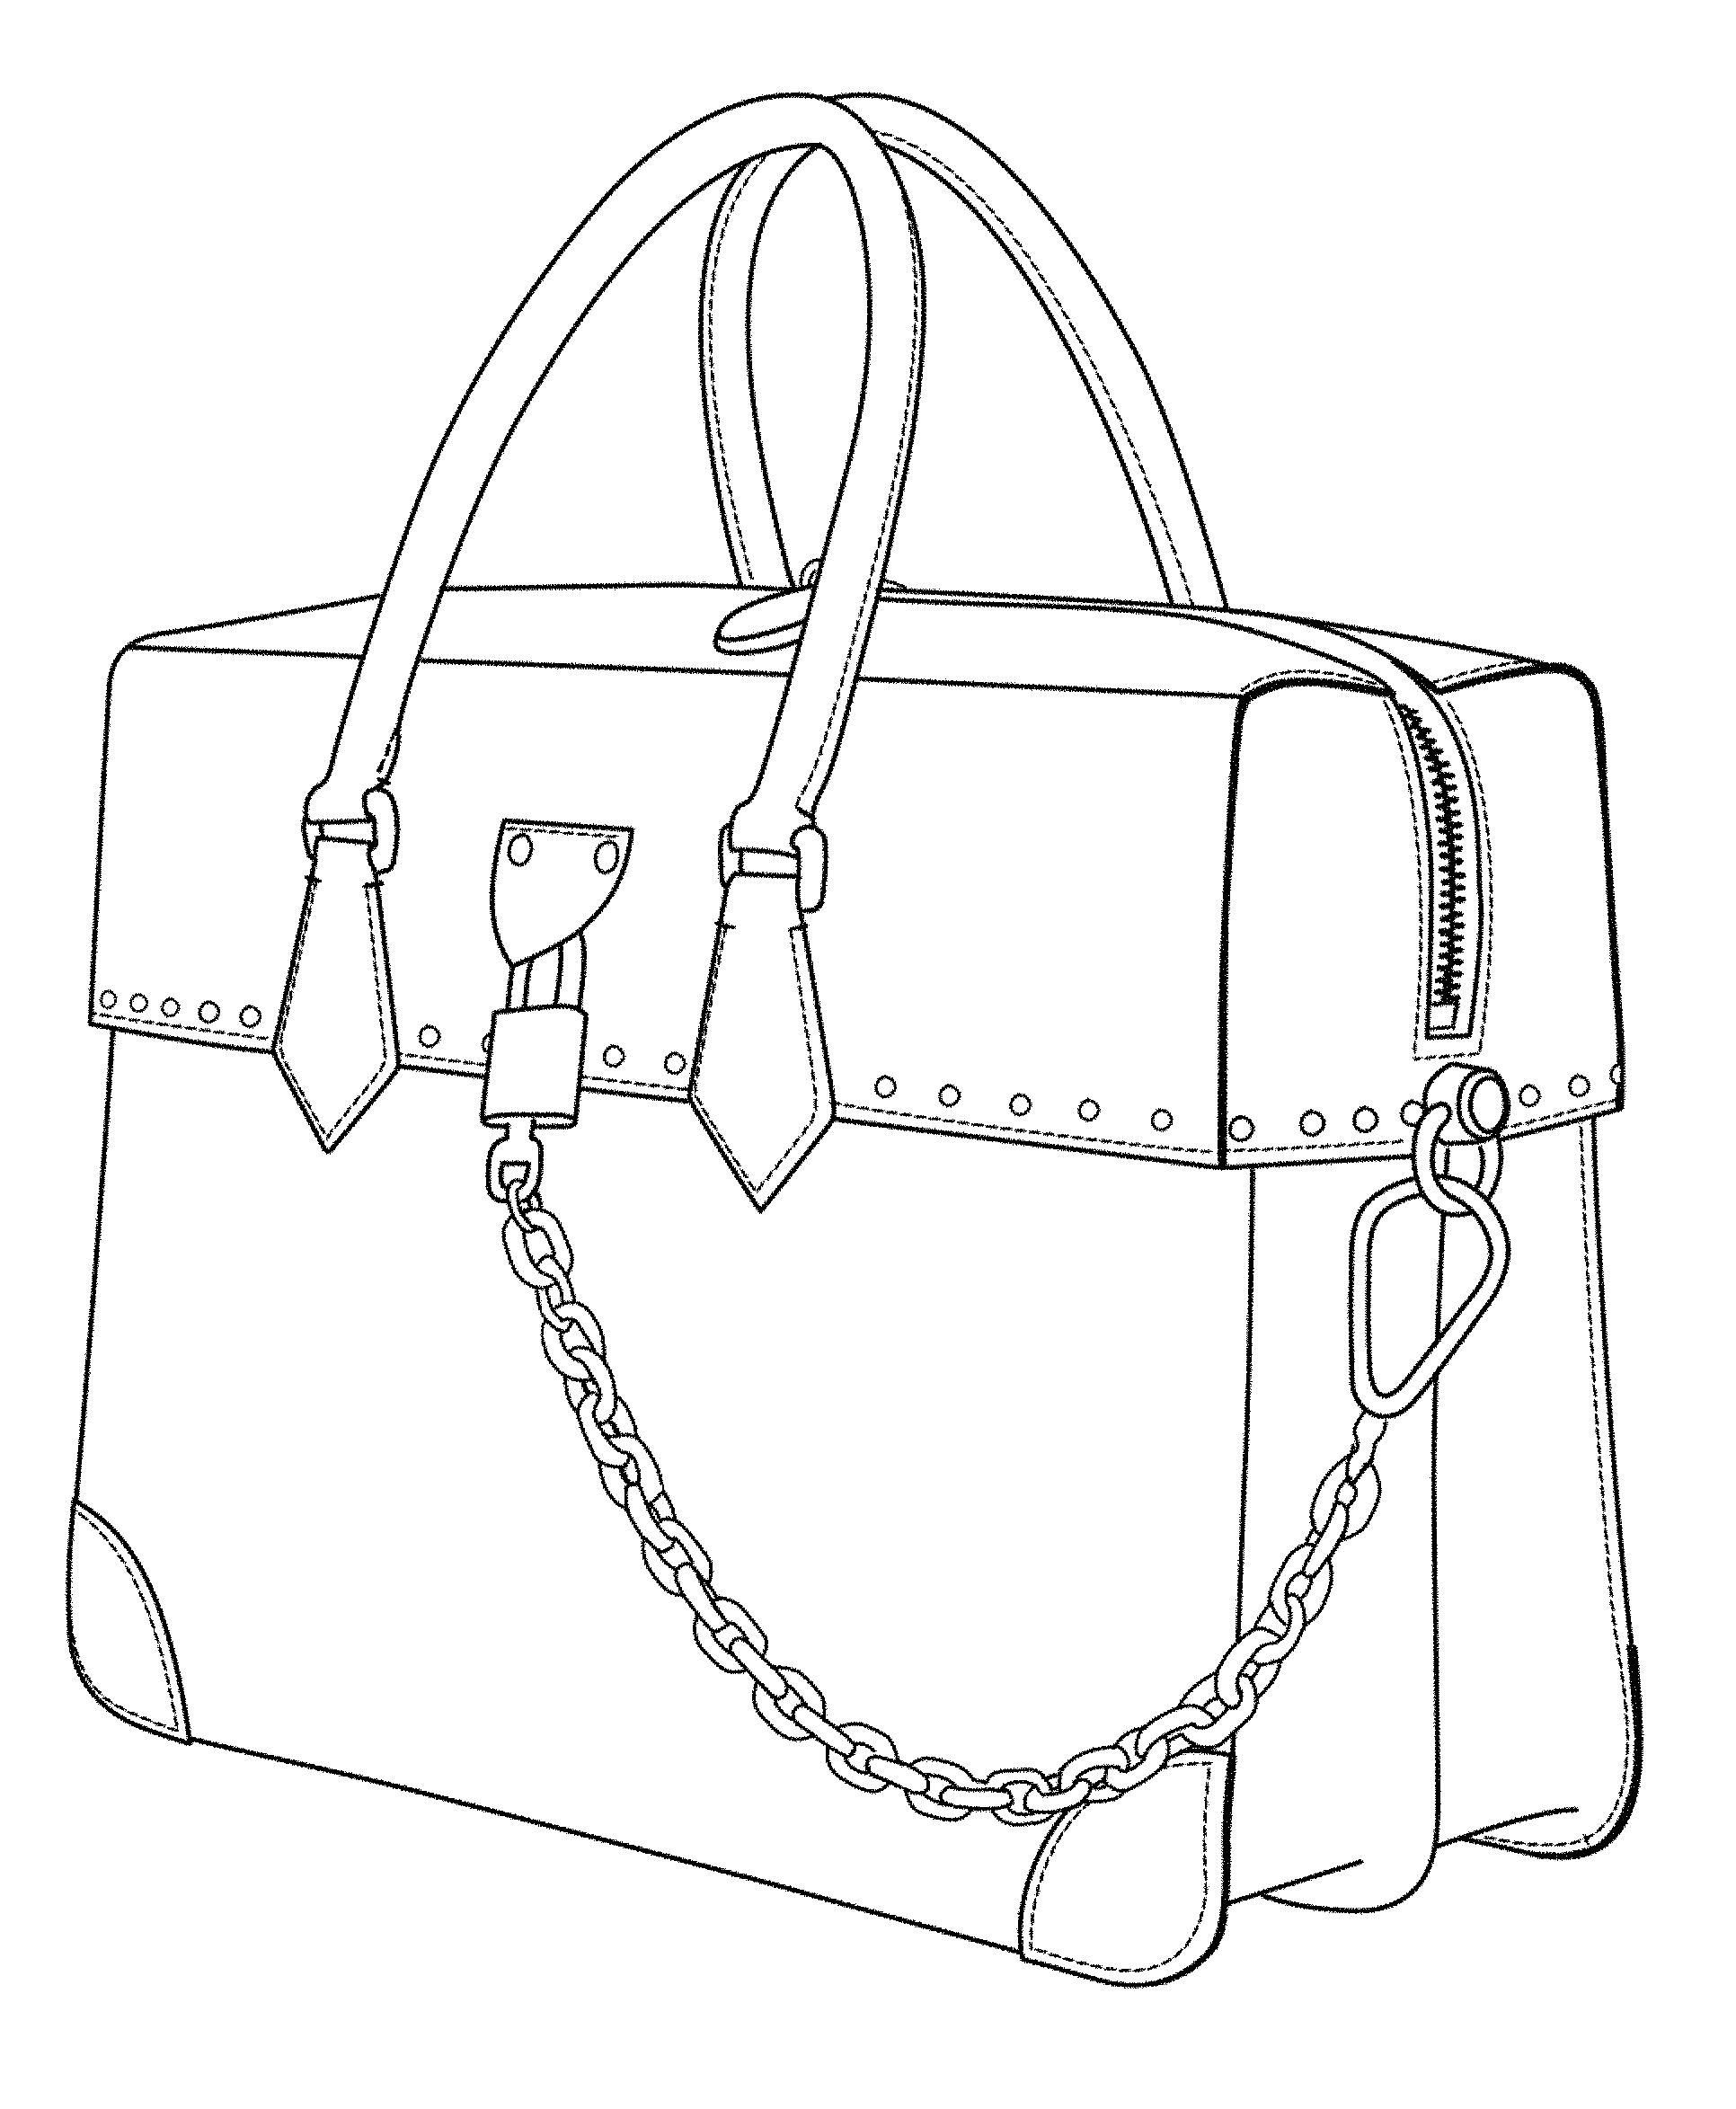 Handbag Patent Grant Bertrand Dec [LOUIS VUITTON MALLETIER]